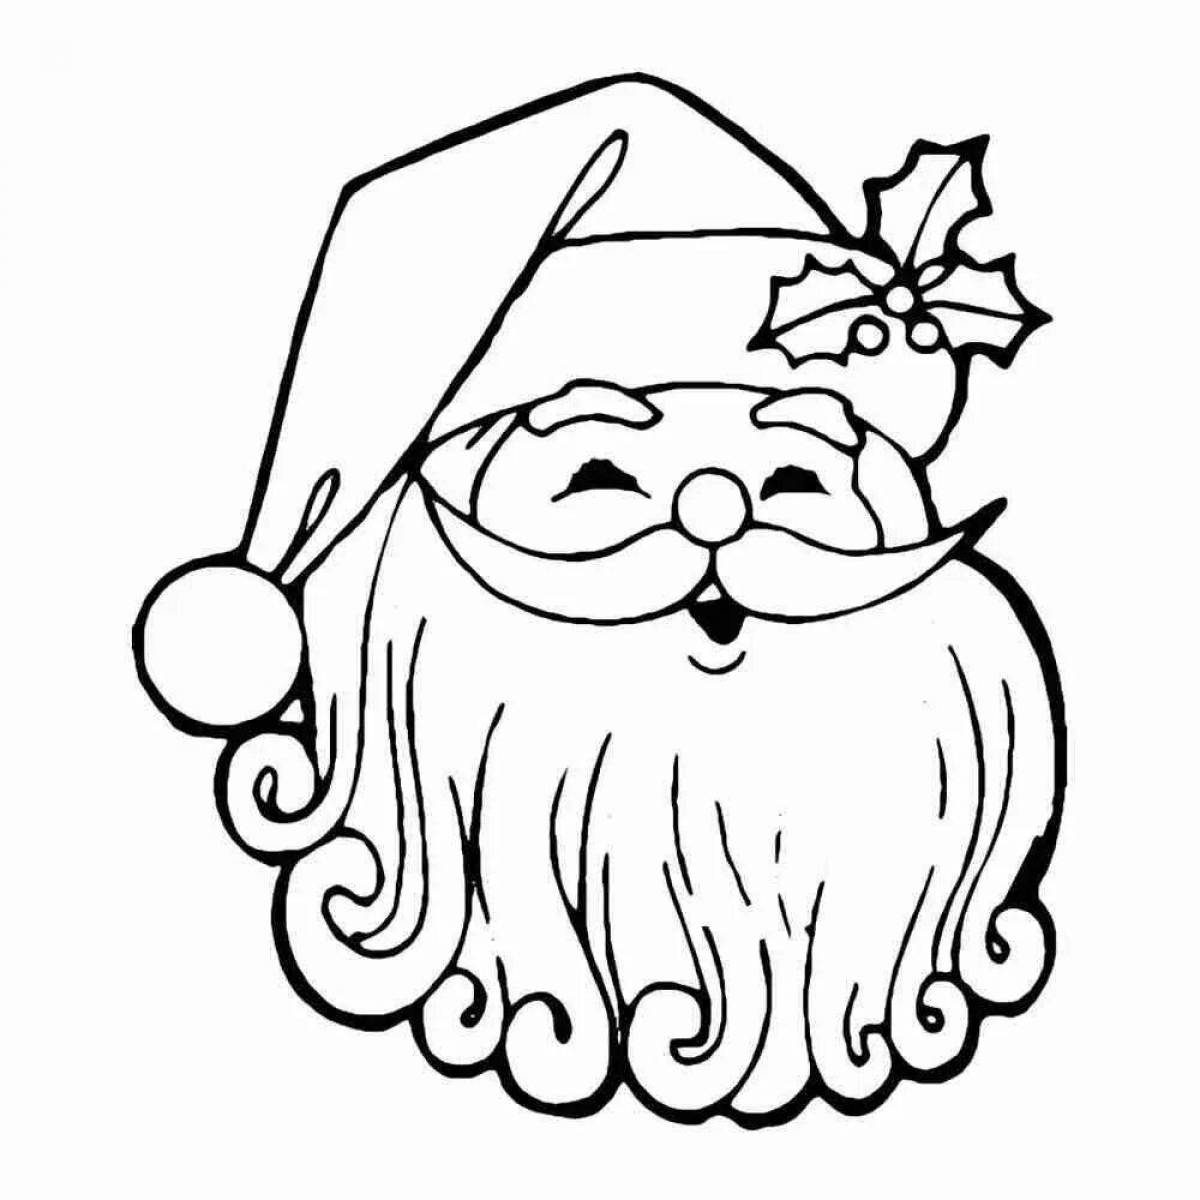 Santa claus bright coloring page